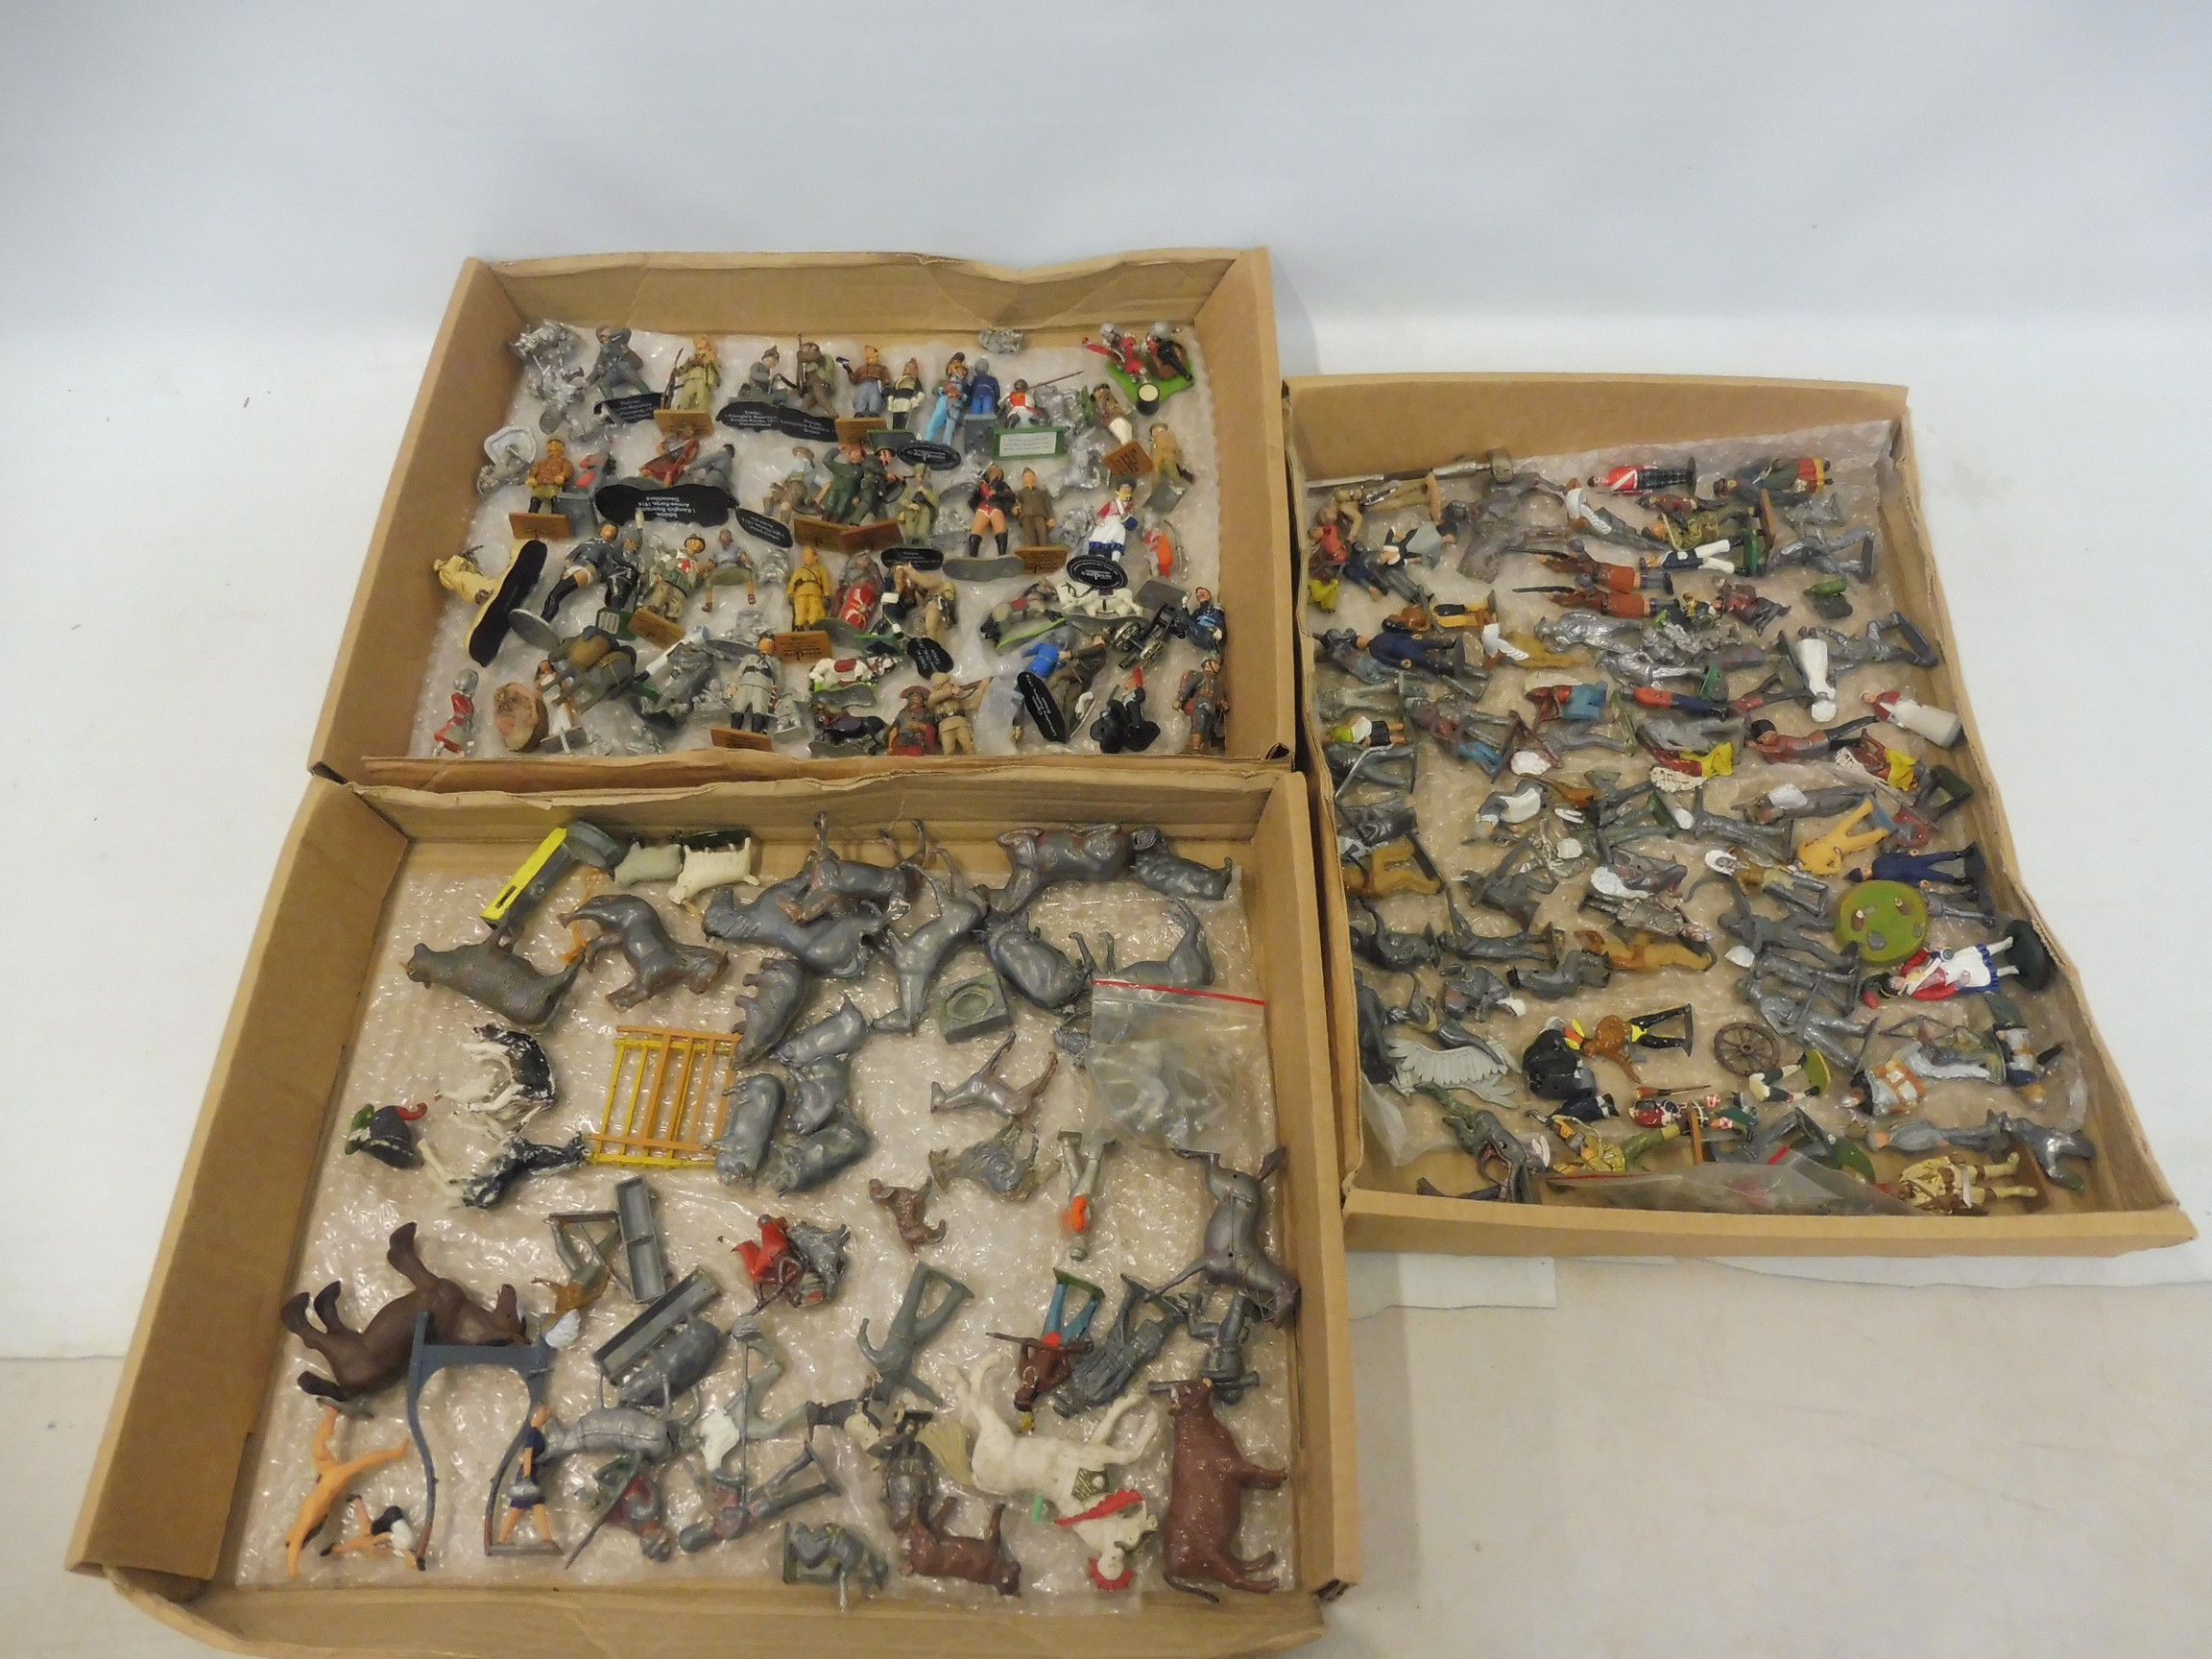 Three trays of assorted metal die-cast figures.